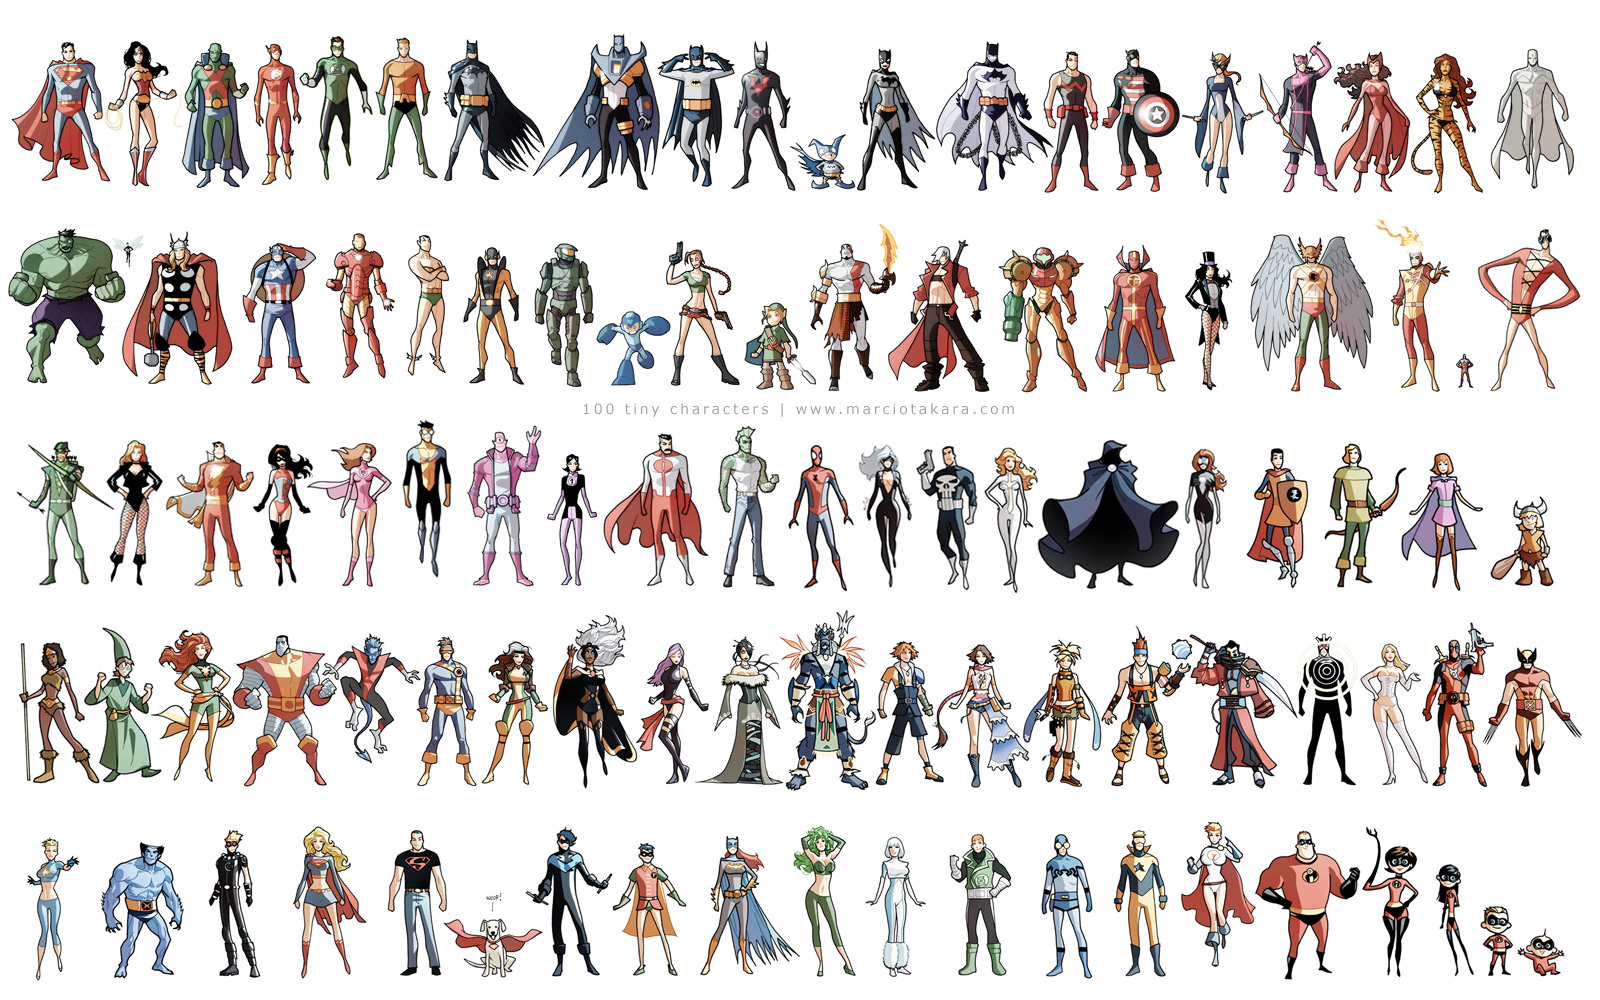 god of war, comics, collage, aquaman, atom (dc comics), atom eve, avengers, batgirl, batman, batwoman, beast (marvel comics), billy batson, black canary, black cat (marvel comics), captain america, carter hall, cloak (marvel comics), colossus, conner kent, dagger (marvel comics), dash parr, dazzler (marvel comics), dc comics, deadpool, devil may cry, dick grayson, dove (dc comics), dupli kate, elastigirl, emma frost, final fantasy, fire (dc comics), firestorm (dc comics), flash, green arrow, green lantern, hal jordan, havok (marvel comics), hawkeye, hawkman (dc comics), hulk, ice (dc comics), invincible (image comics), iron man, jack jack parr, janet van dyne, jean grey, justice league, krypto (dc comics), lara croft, link, mark grayson, martian manhunter, mega man, mr incredible, namor the sub mariner, nightcrawler (marvel comics), omni man, phoenix (marvel comics), plastic man, power girl, psylocke (marvel comics), punisher, robin (dc comics), rogue (marvel comics), samantha eve wilkins, scarlet witch, shazam (dc comics), spider man, storm (marvel comics), superboy, supergirl, superman, thor, tigra (marvel comics), tomb raider, violet parr, wasp (marvel comics), wolverine, wonder woman, x men, zatanna 4K Ultra